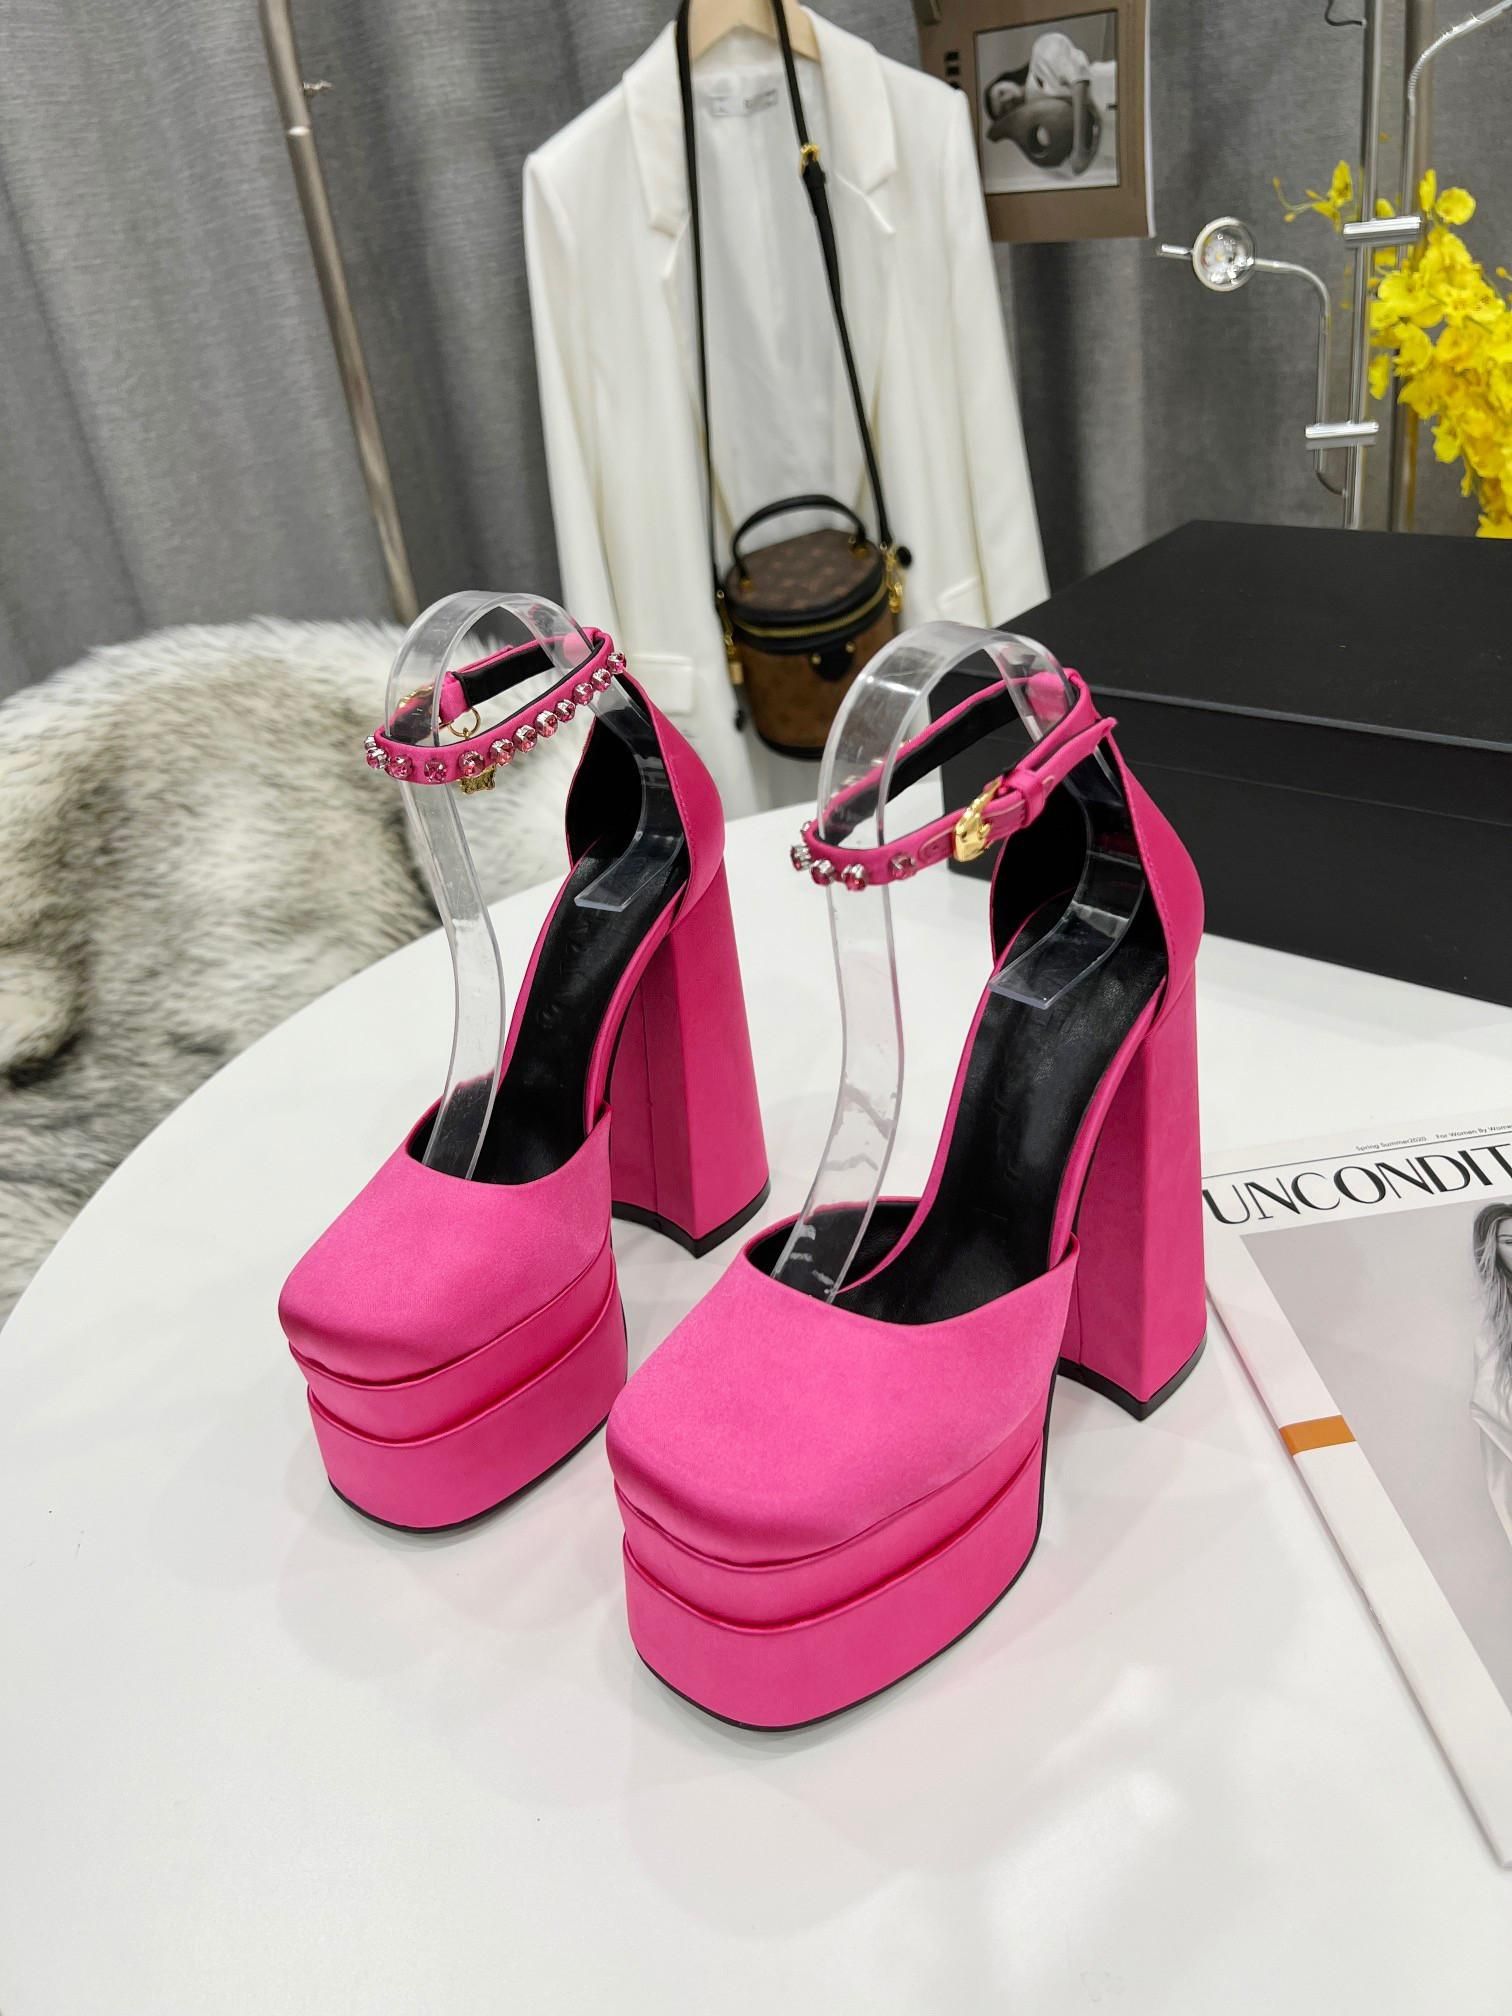 Sandalias de diseño Mujeres Aevitas Sandalia Plataforma Tacones Altos Zapatos Cristal Zapato Doble Tobillo